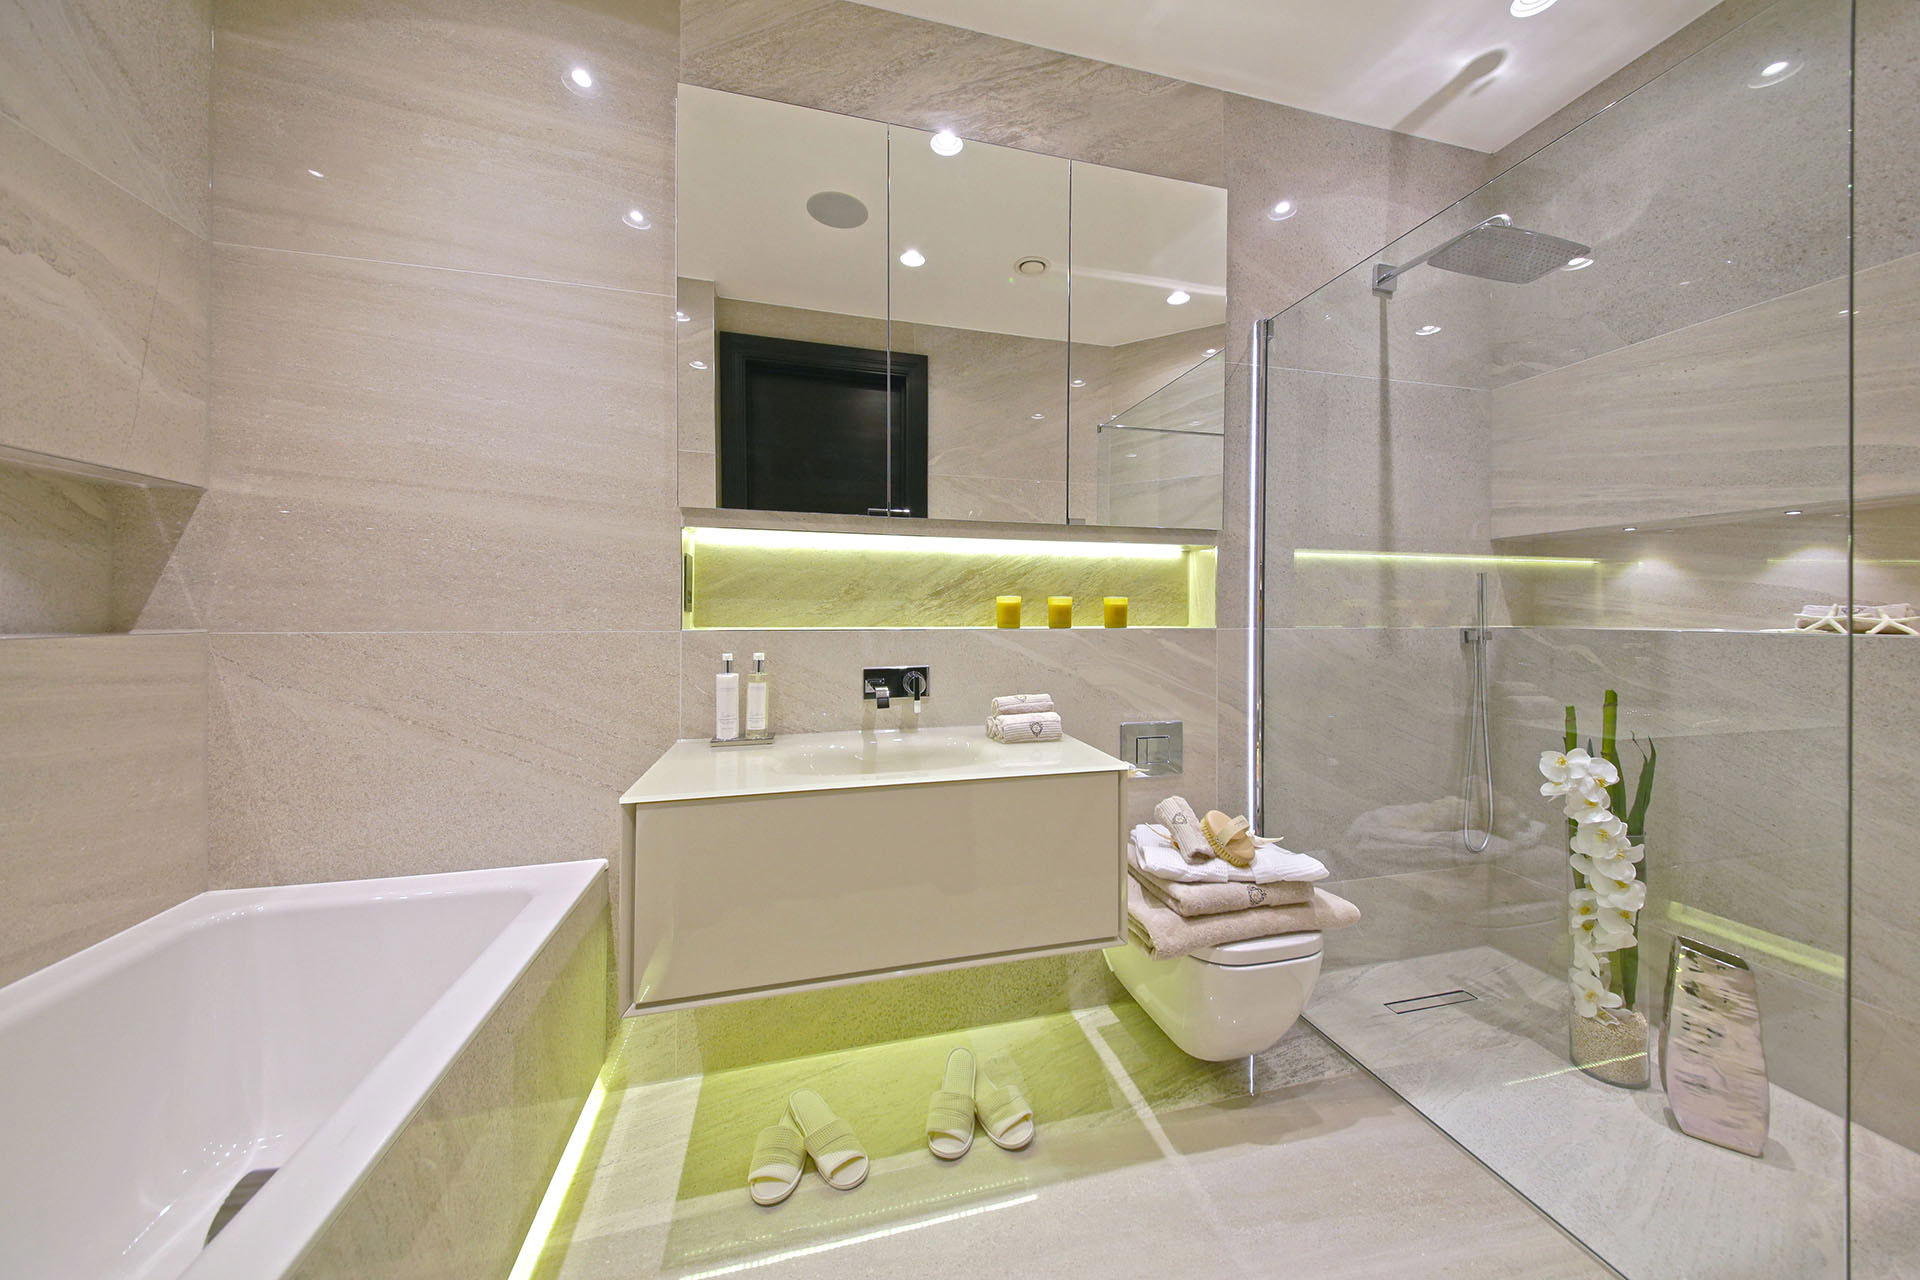 The Residence - bathroom & tiles